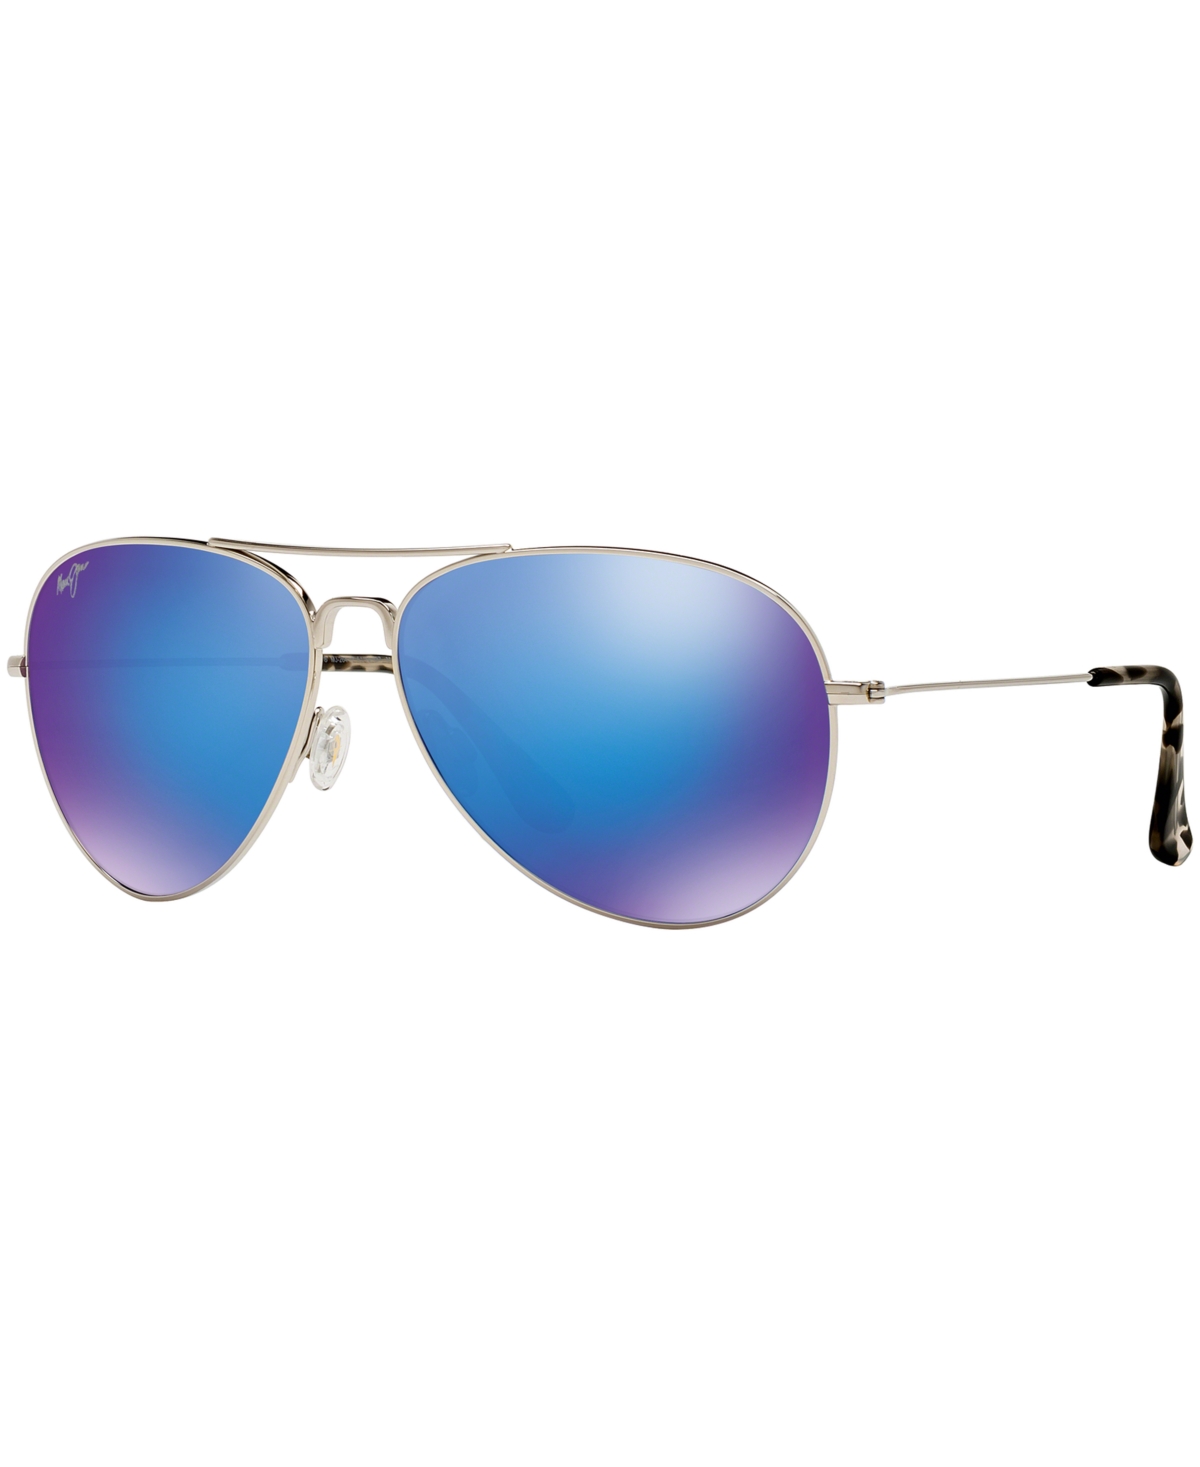 Maui Jim Polarized Mavericks Sunglasses, 264 In Silver Shiny,blue Mirror Polar